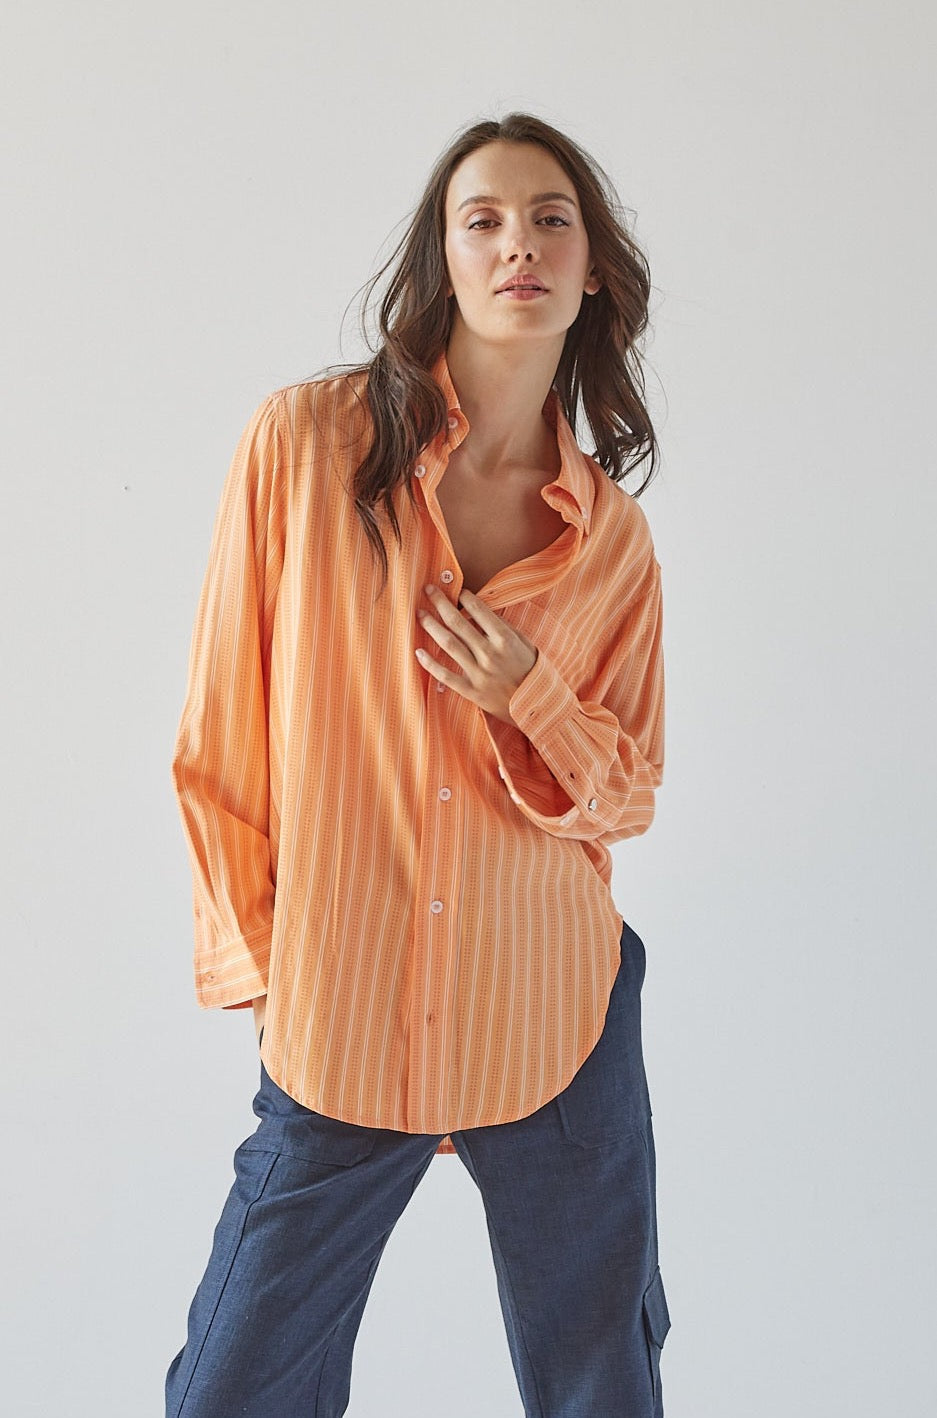 Adroit Atelier Kean Boyfriend Striped Button Down Shirt in Tangerine